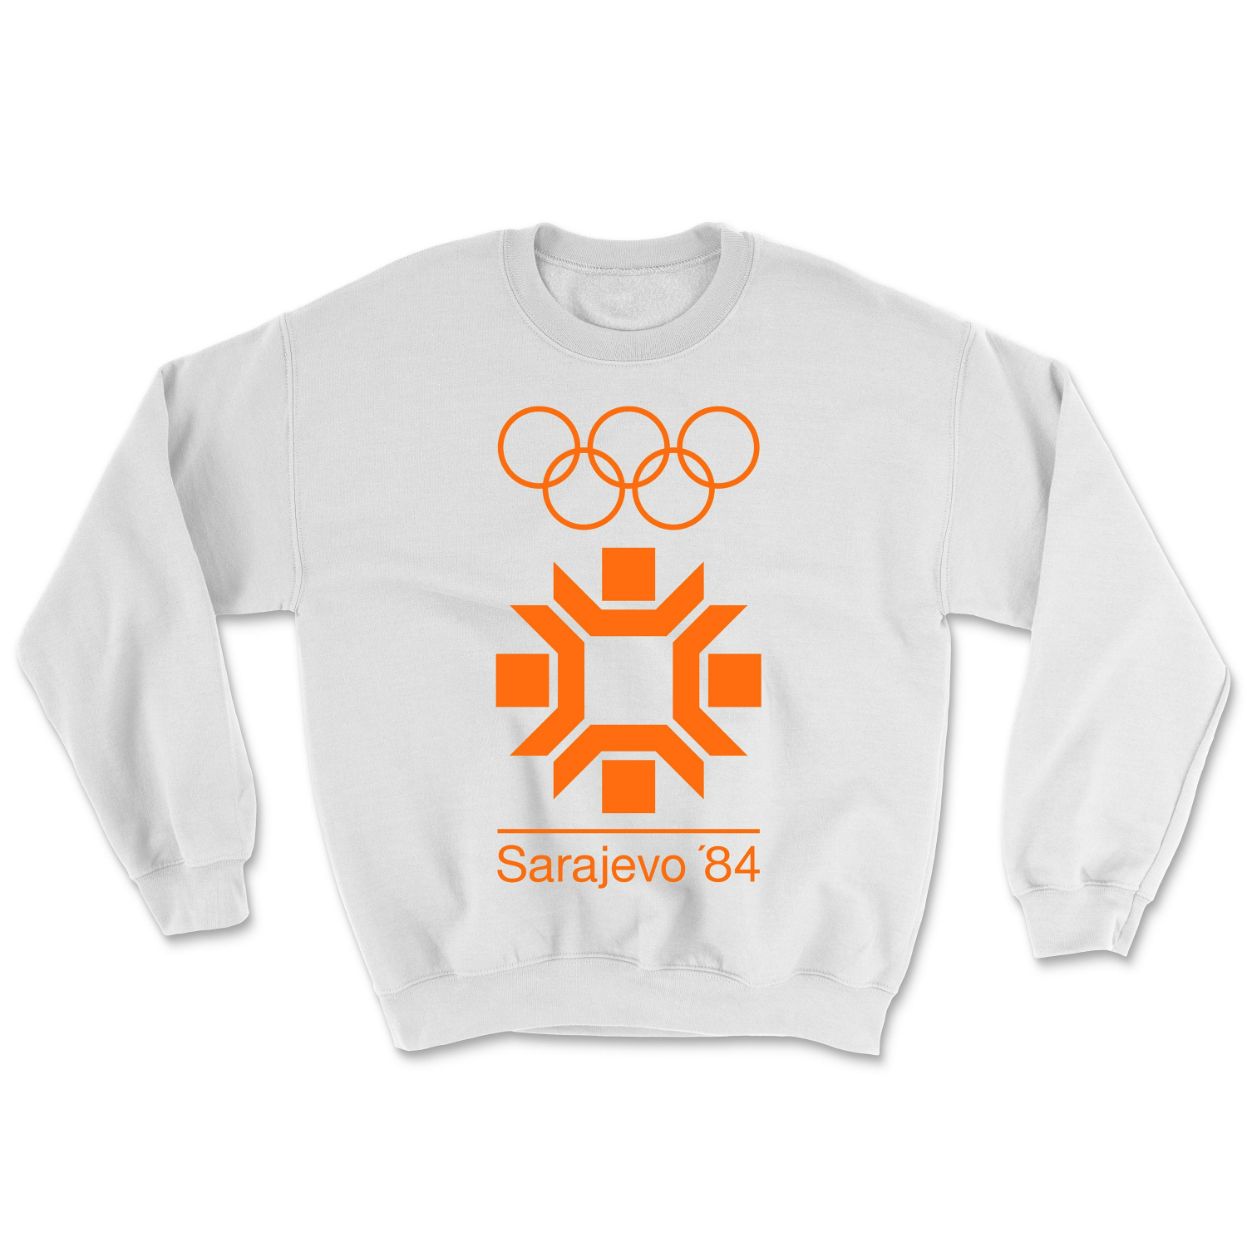 Sarajevo 1984 Winter Olympics Ringer Tee Crewneck Sweatshirt